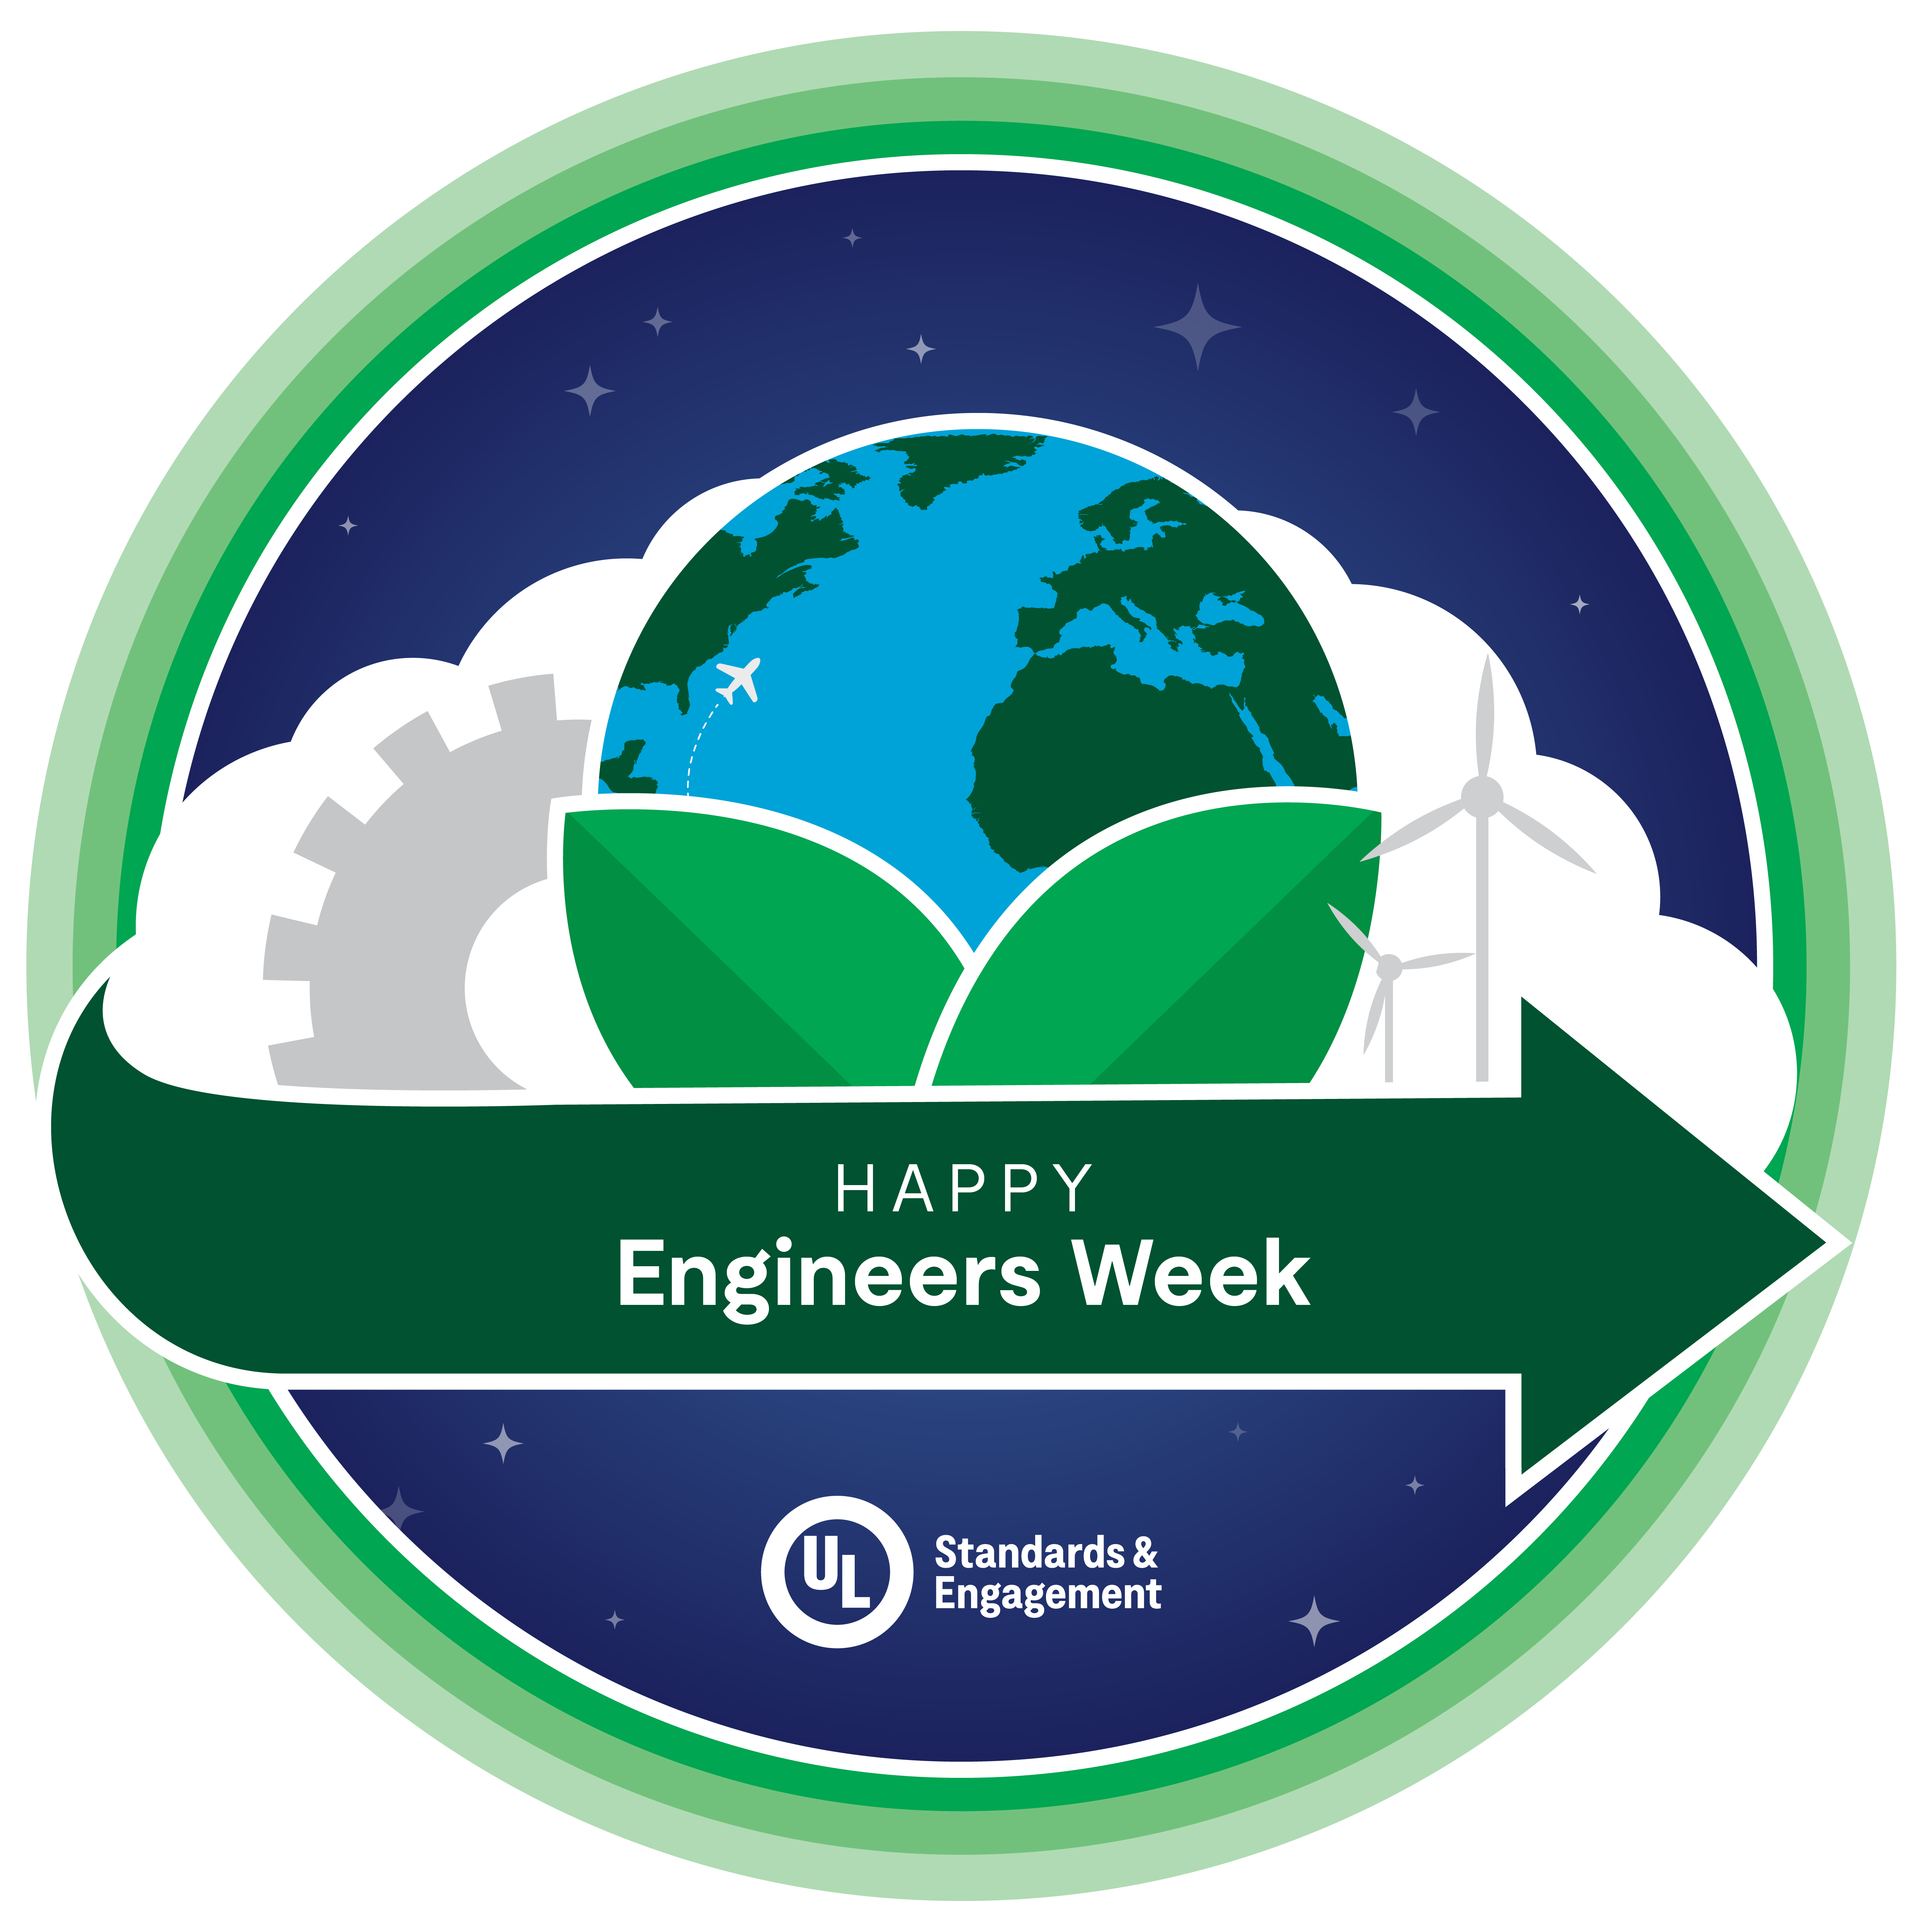 Engineers Week 2023 Creating the Future UL Standards & Engagement